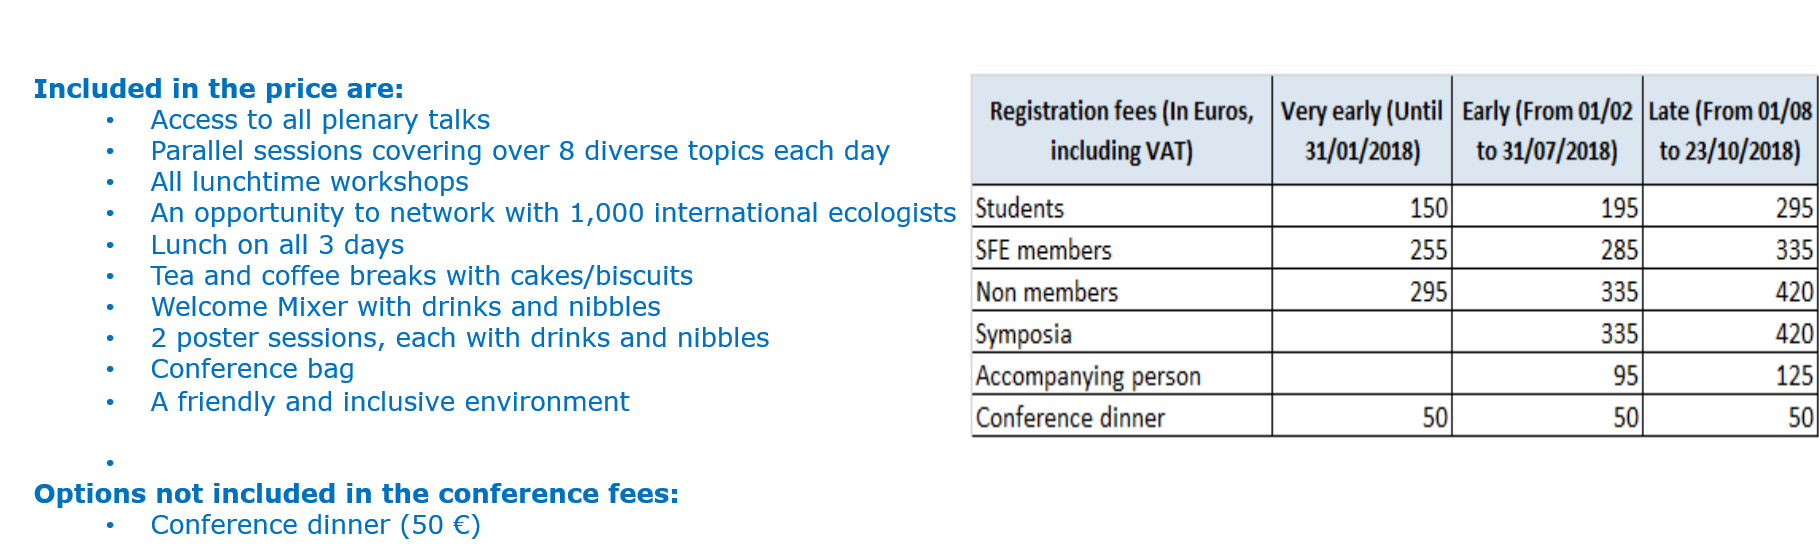 Registration_fees